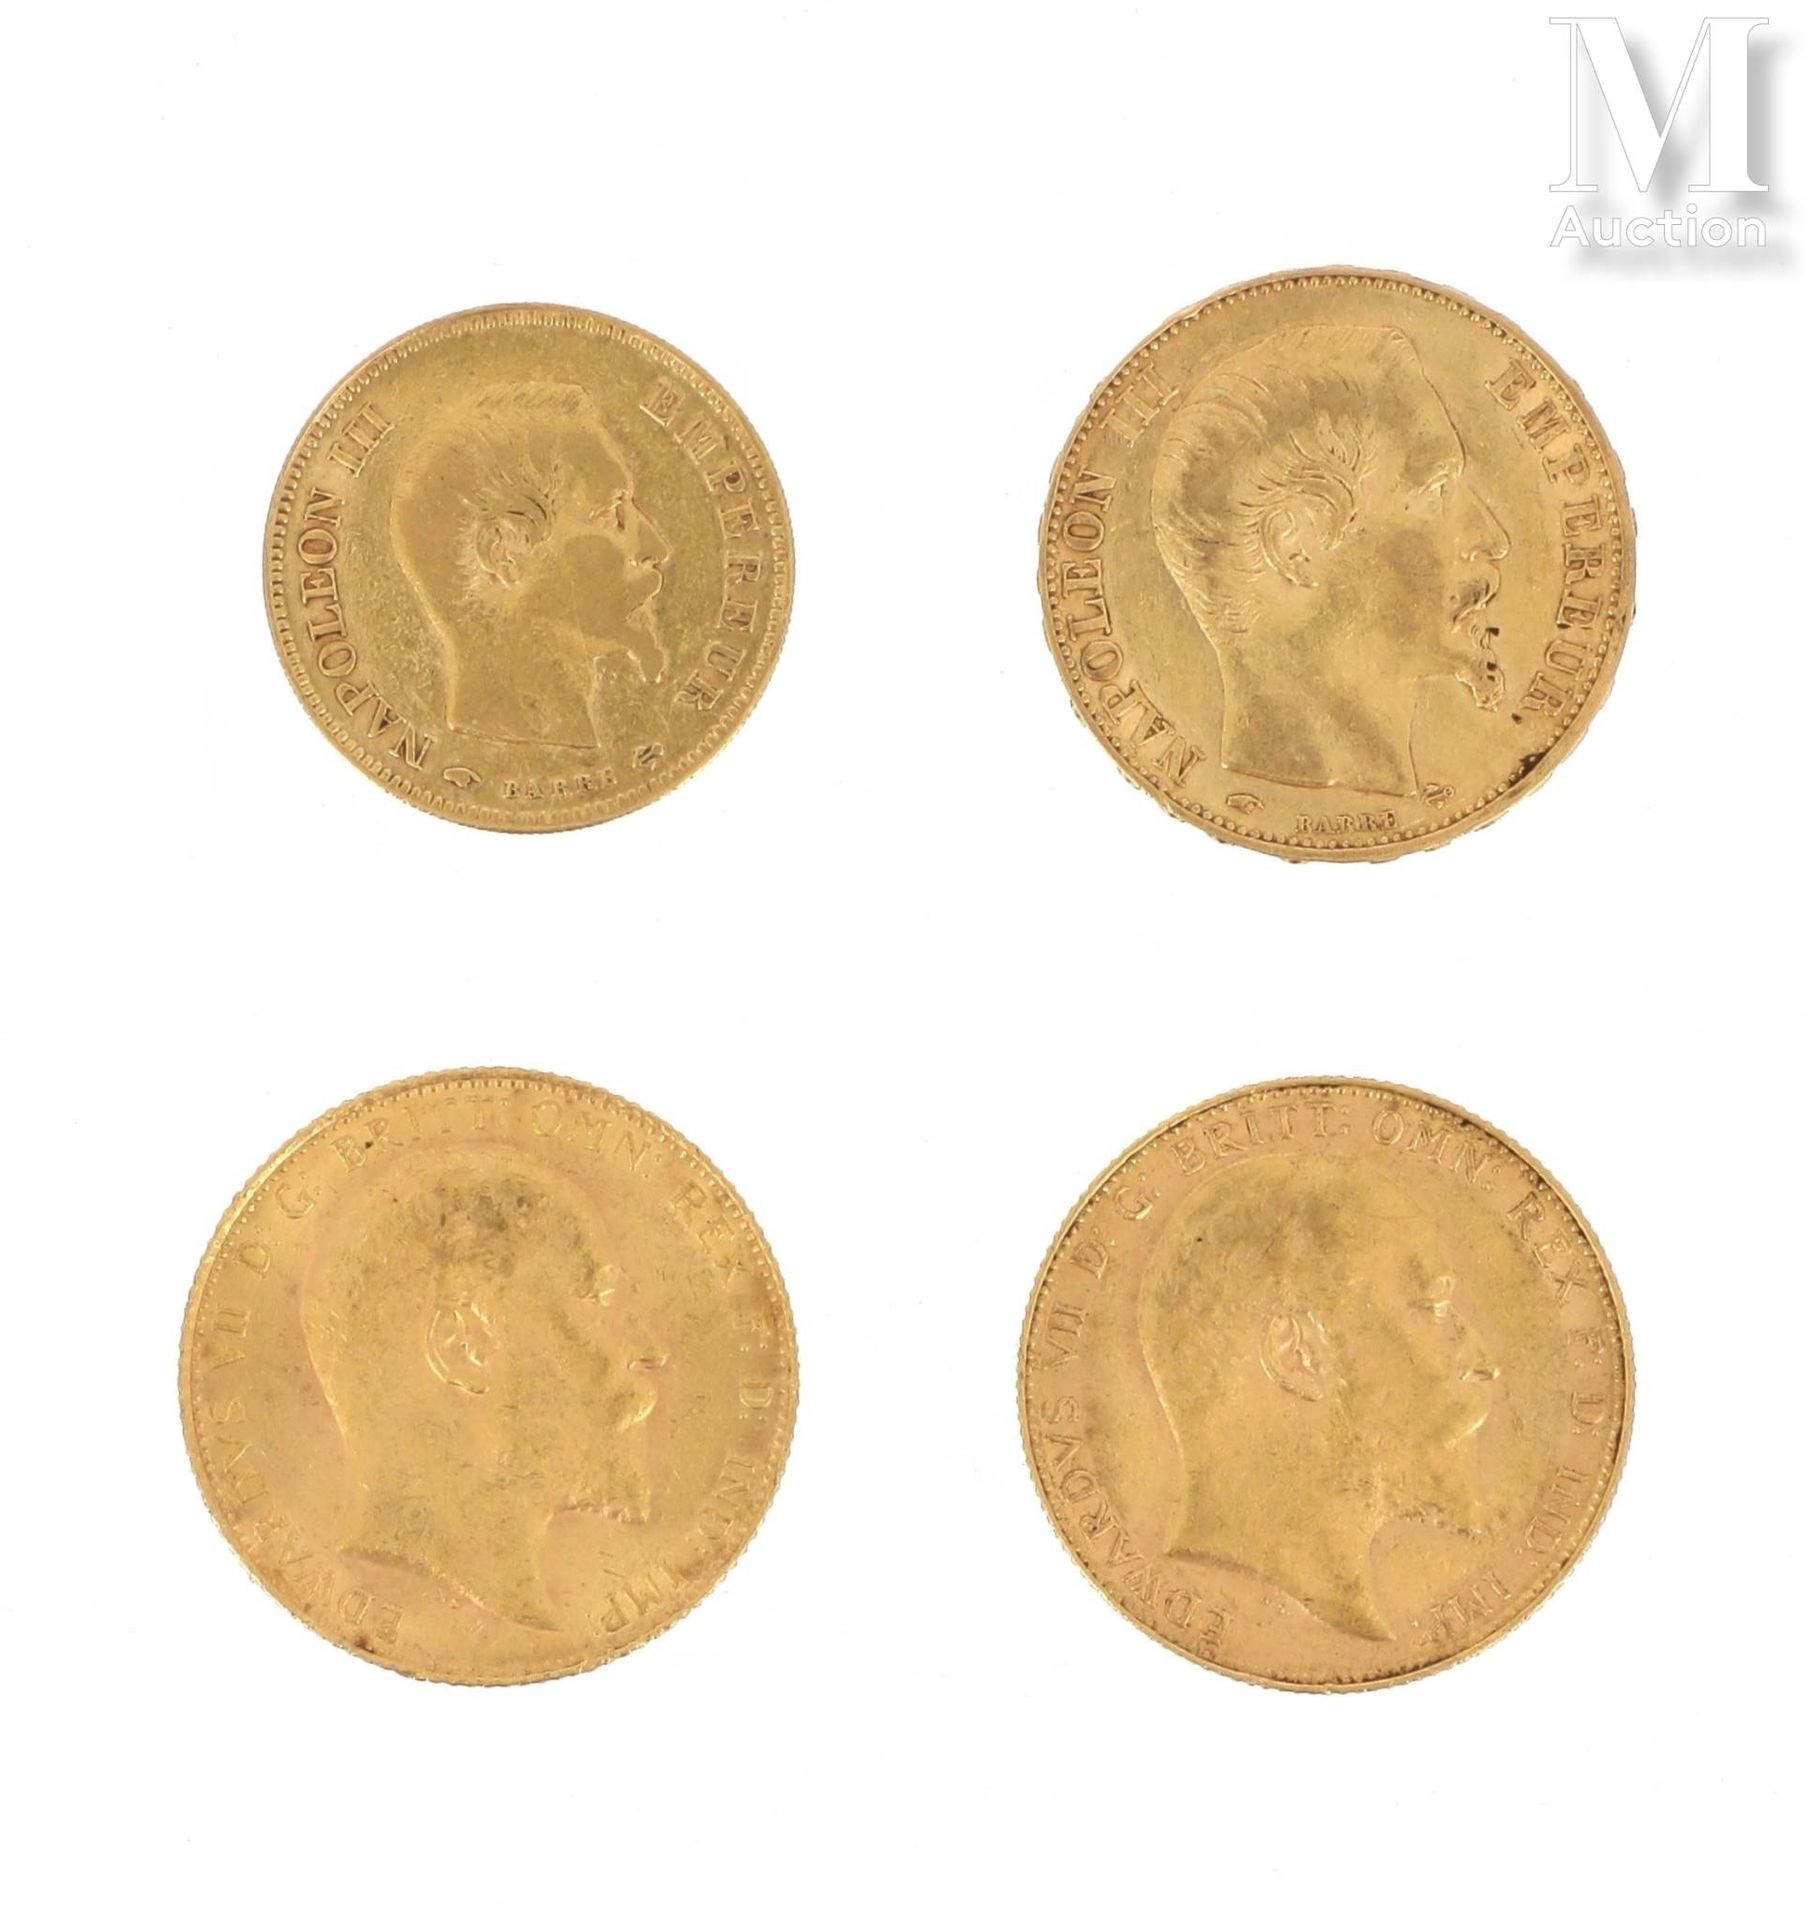 Quatre pièces en or Quattro monete d'oro:

- 2 sovrani Edoardo VII 1906 e 1907

&hellip;